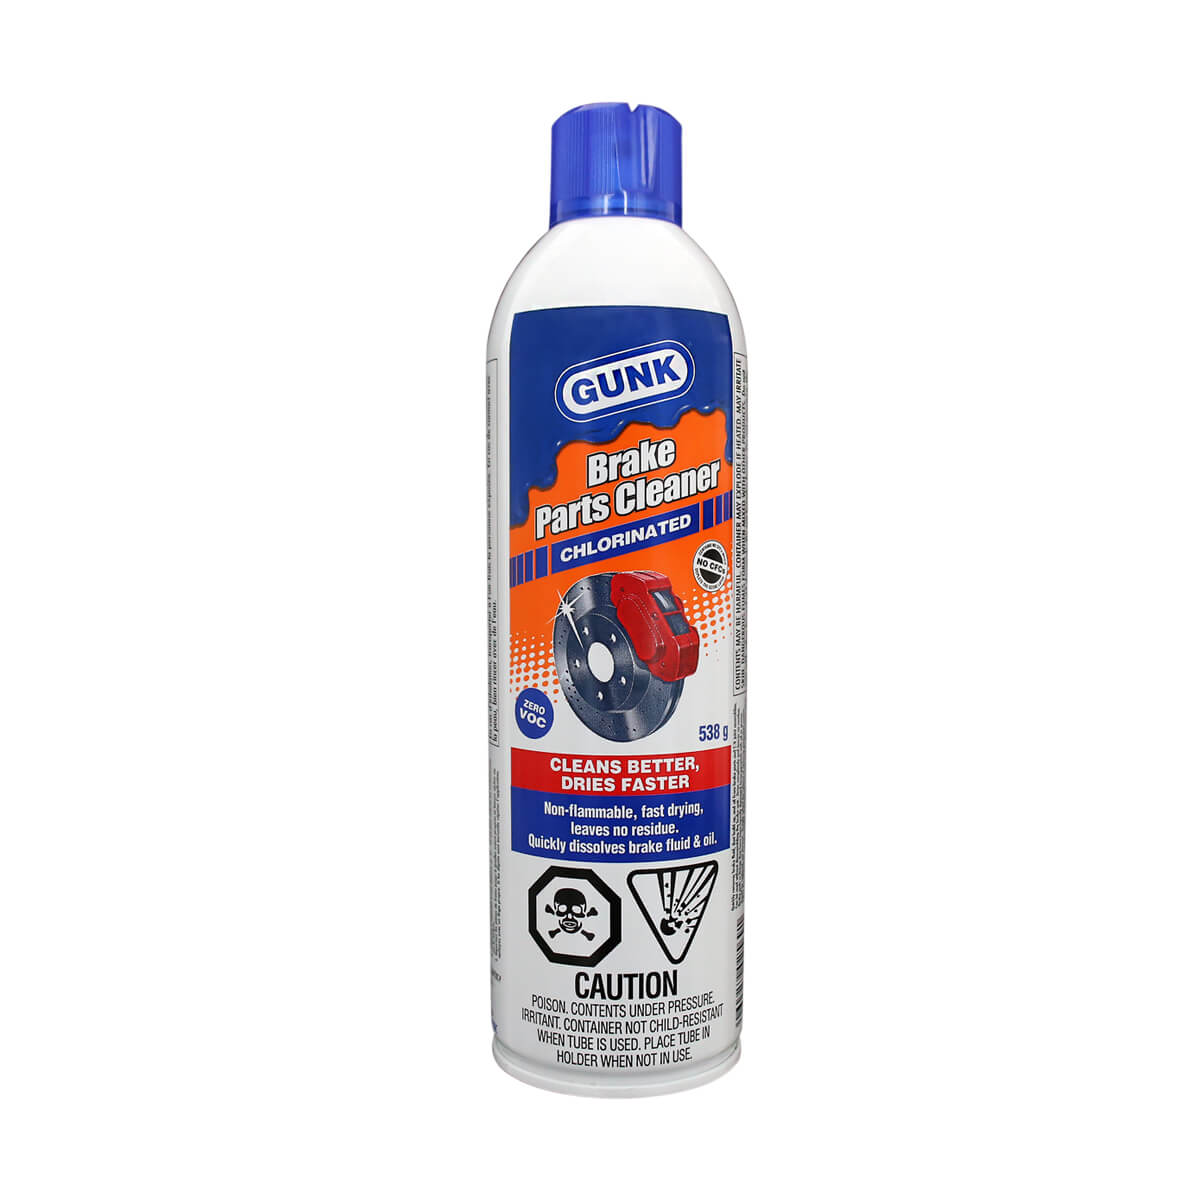 Gunk Brake Cleaner - 538 g